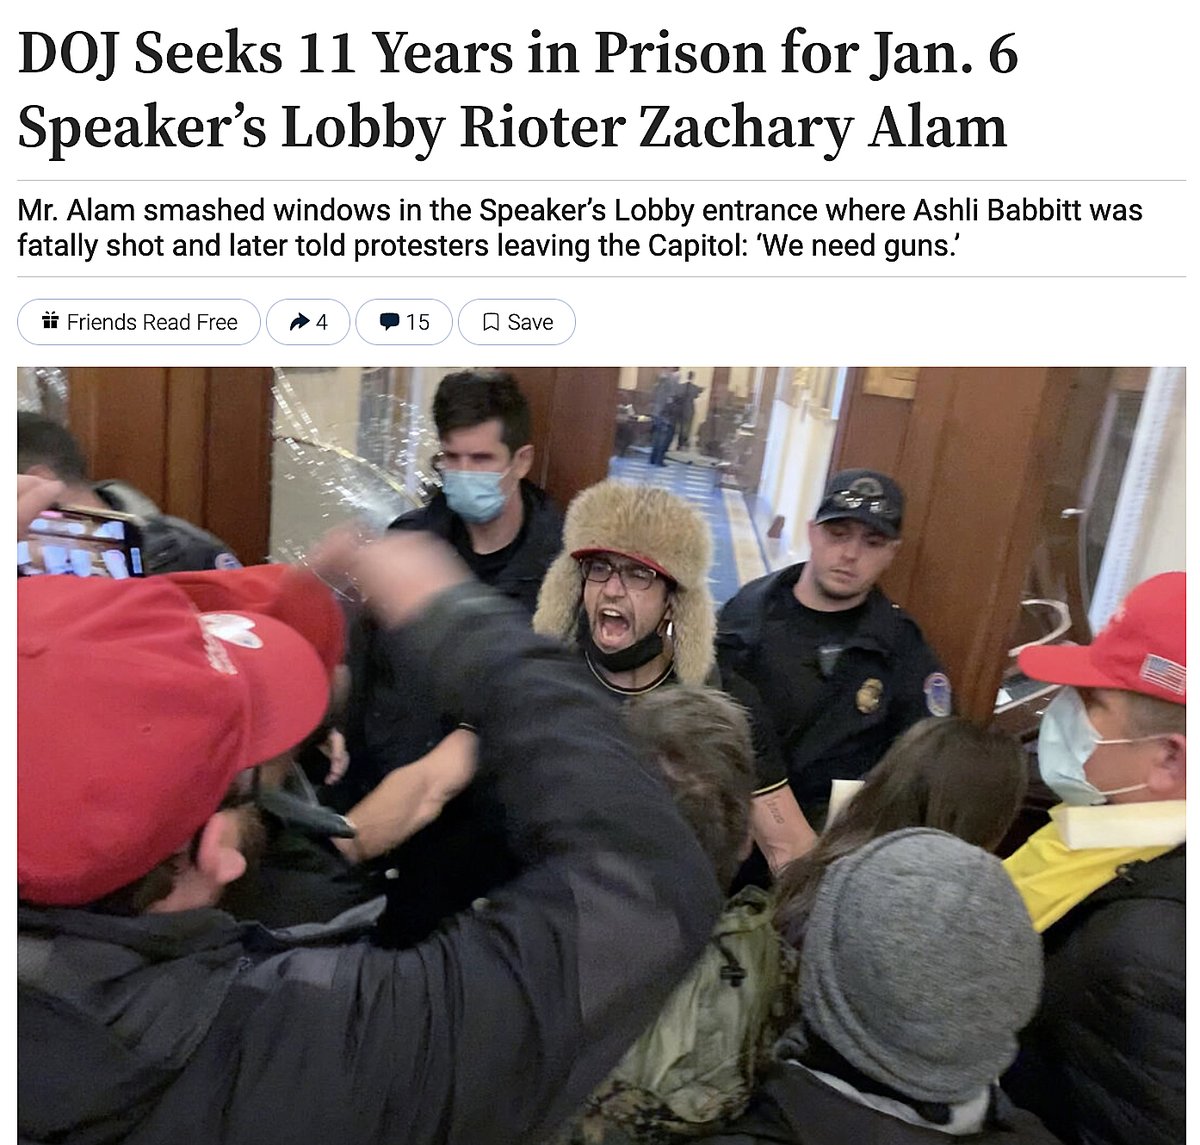 Prosecutors seek one of the longest #Jan6 sentences for Speaker's Lobby rioter: theepochtimes.com/us/doj-seeks-1…